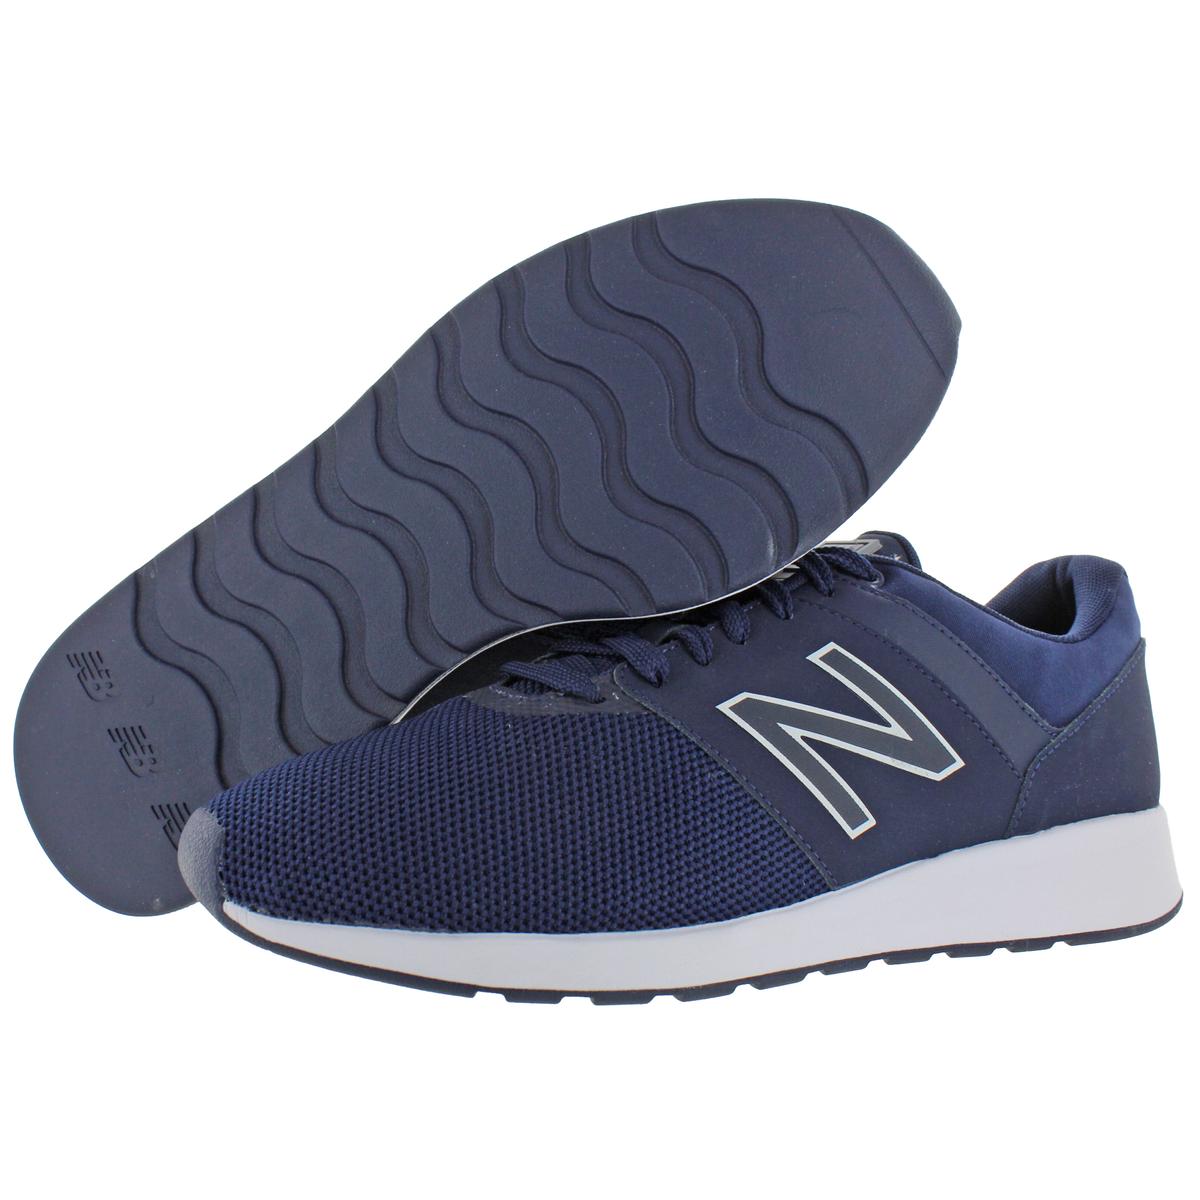 New Balance Men's MRL24 Mesh Athletic Sneakers Shoes | eBay